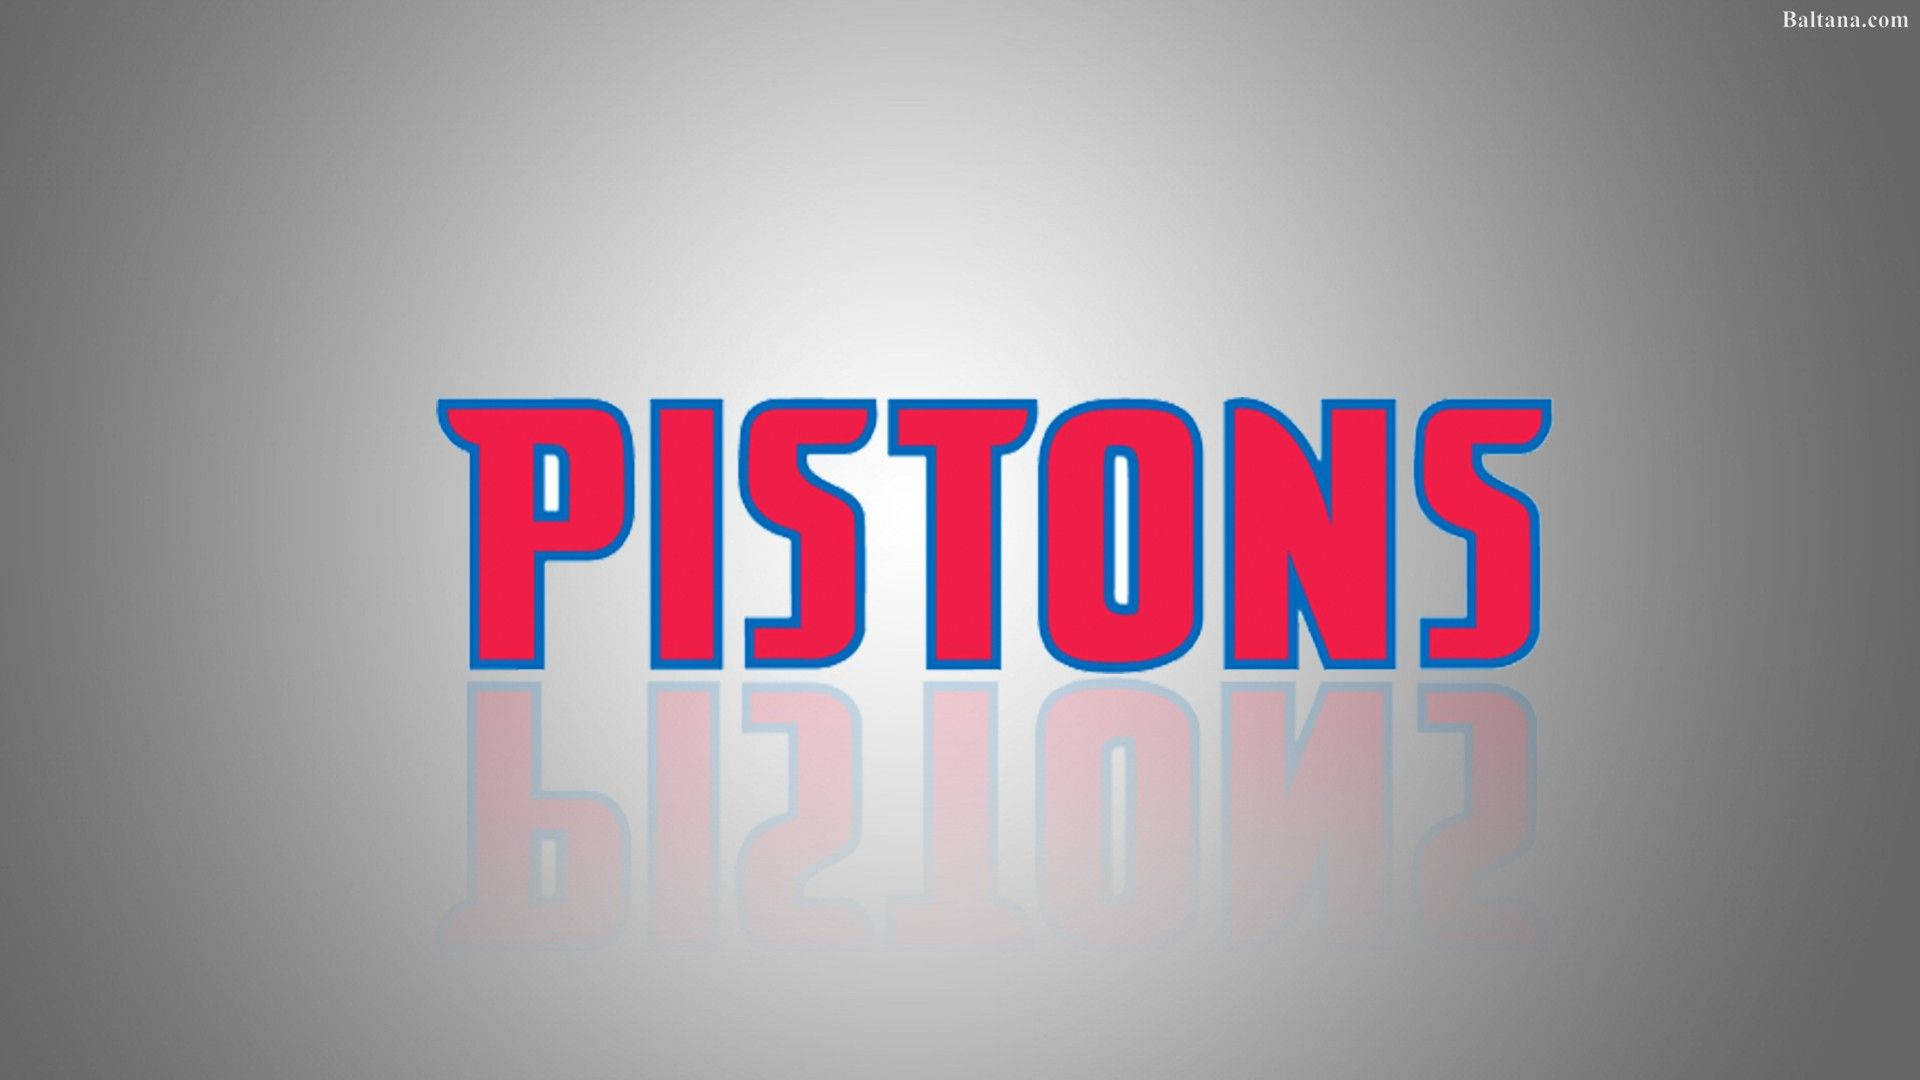 Detroit Pistons Blue Red Lettering Background